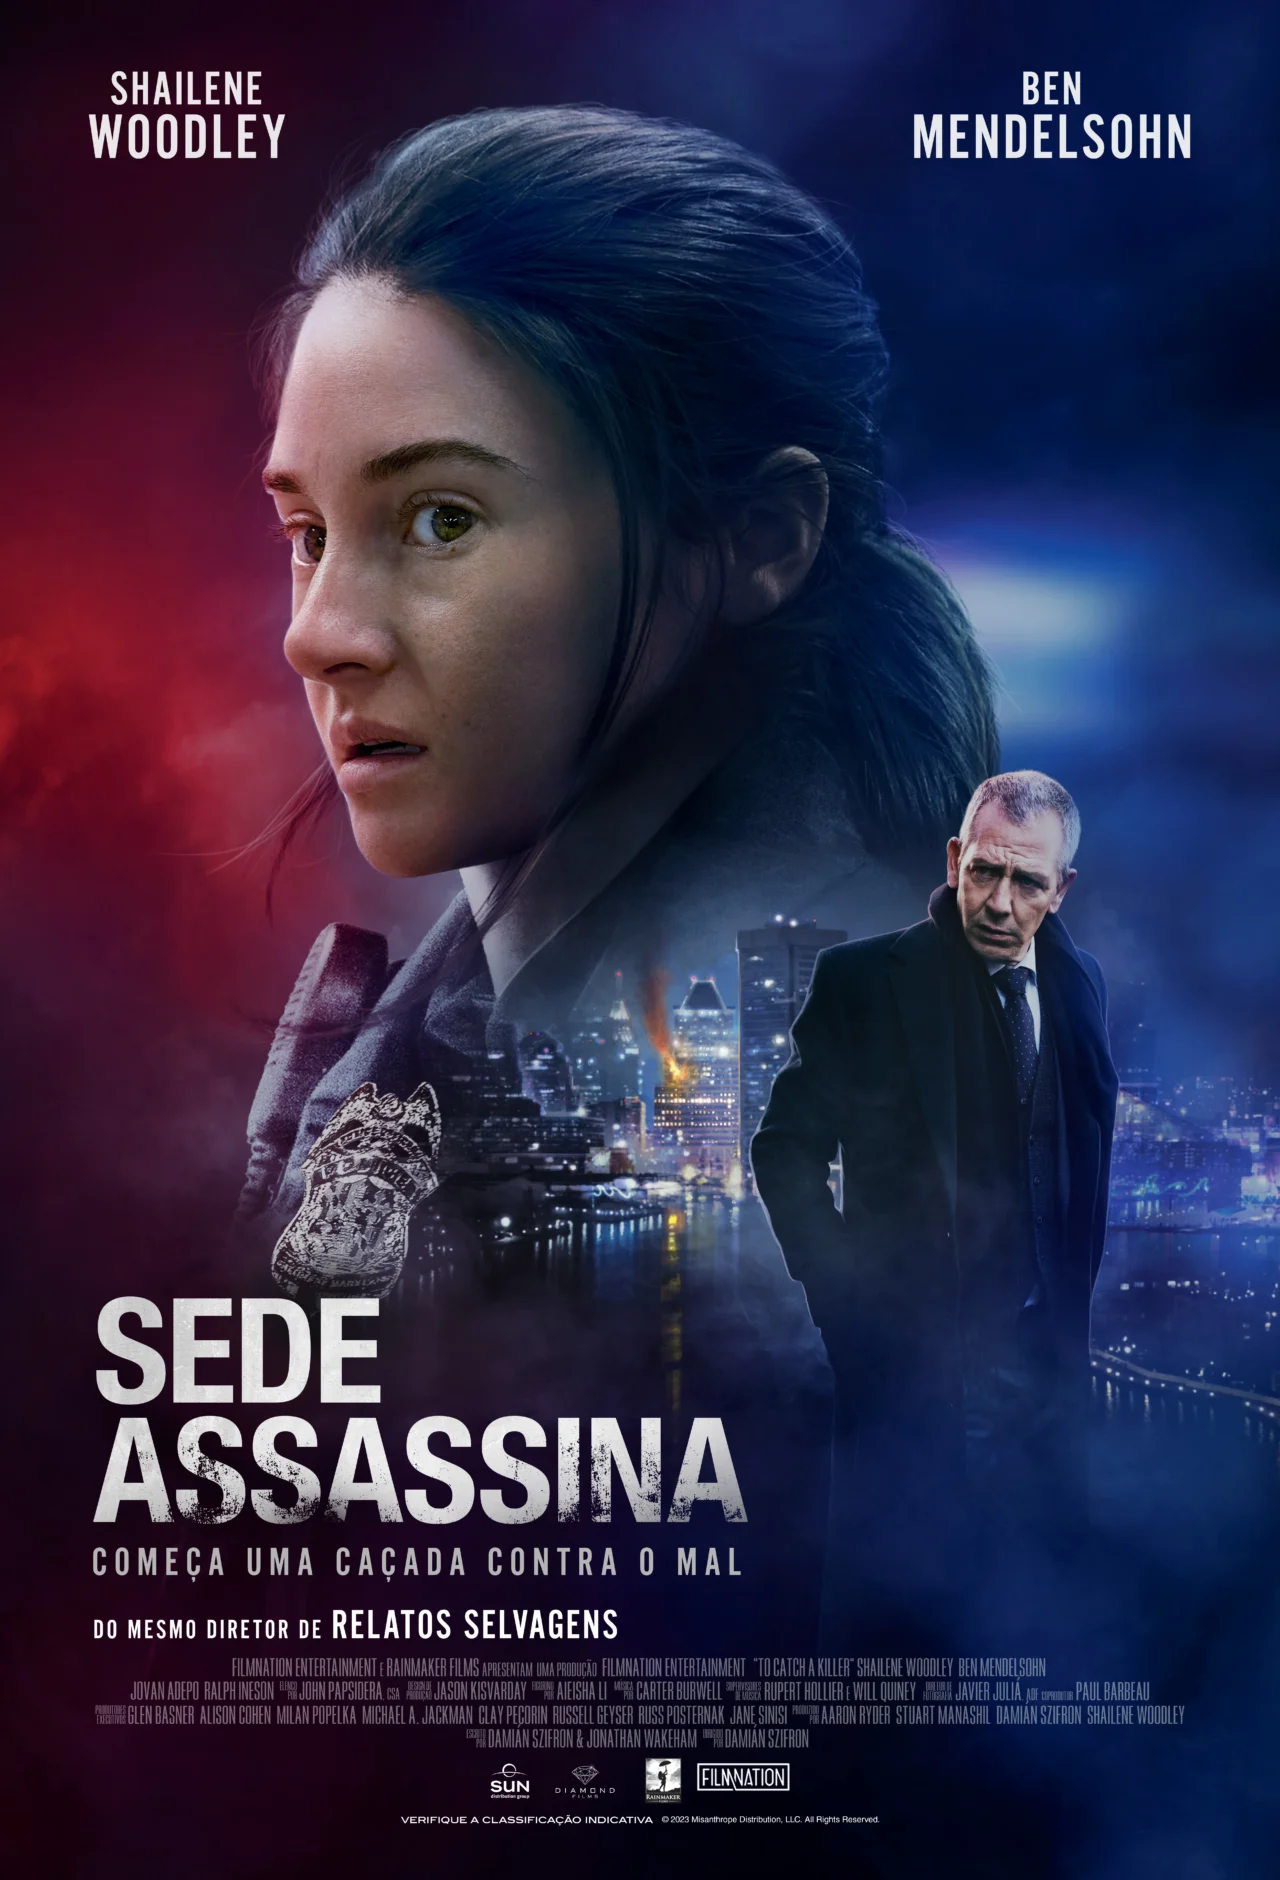 Sede Assassina | Diamonds Films libera poster de Filme com Shailene Woodley e Ben Mendelsohn